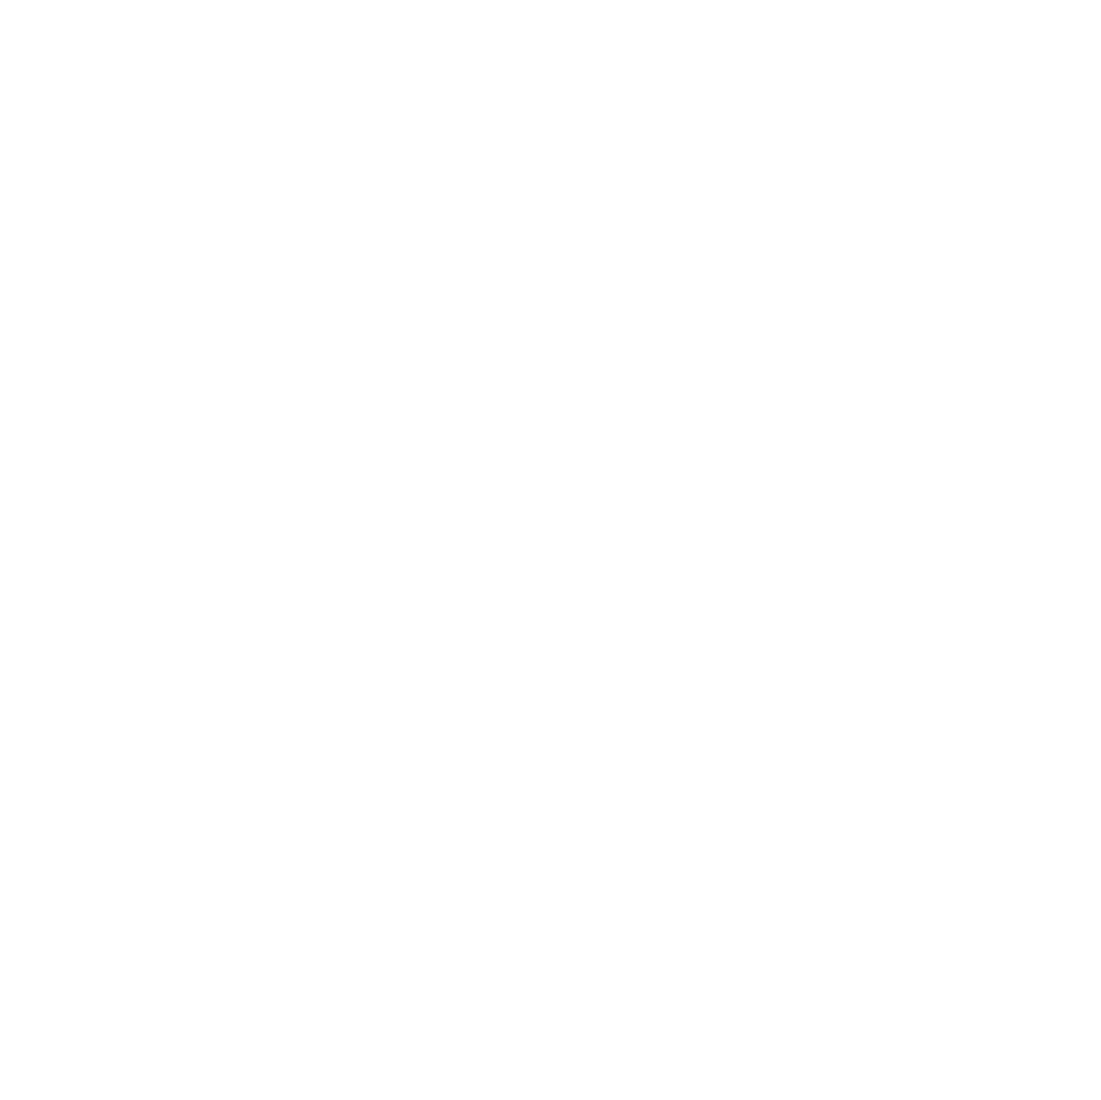 Certified Louisiana Retirement Community